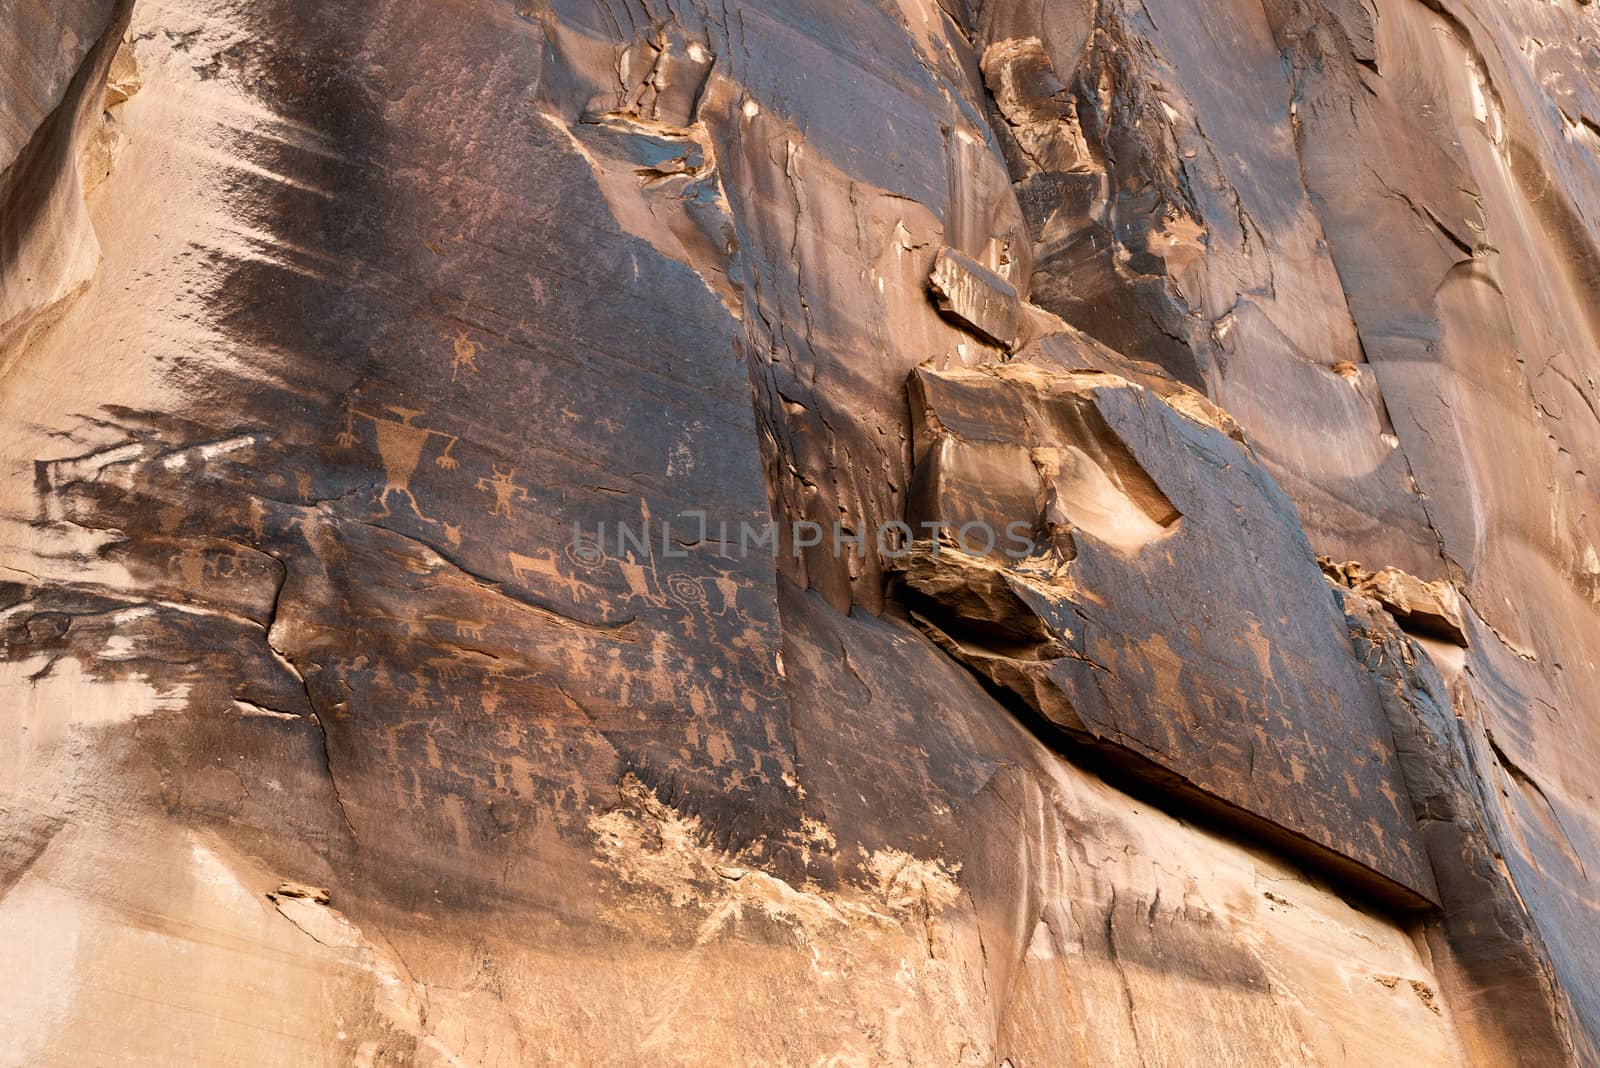 Petroglyph panel at the Utah Highway 279 Rock Art Site by Njean